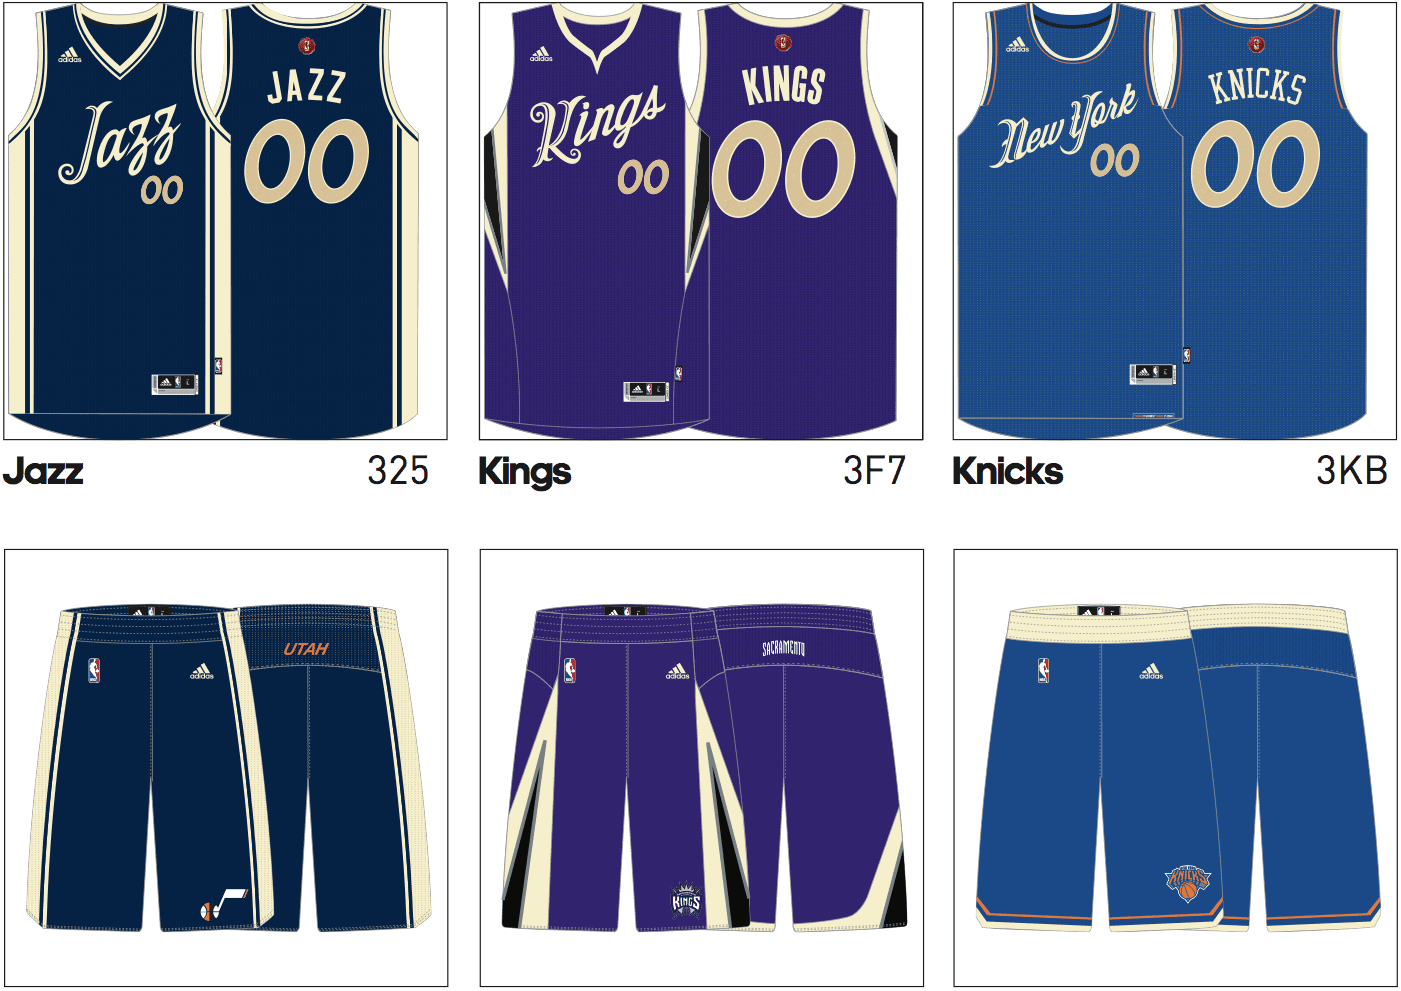 Utah Jazz unveil purple '90s throwback jerseys, tease more uniform  combinations - ESPN